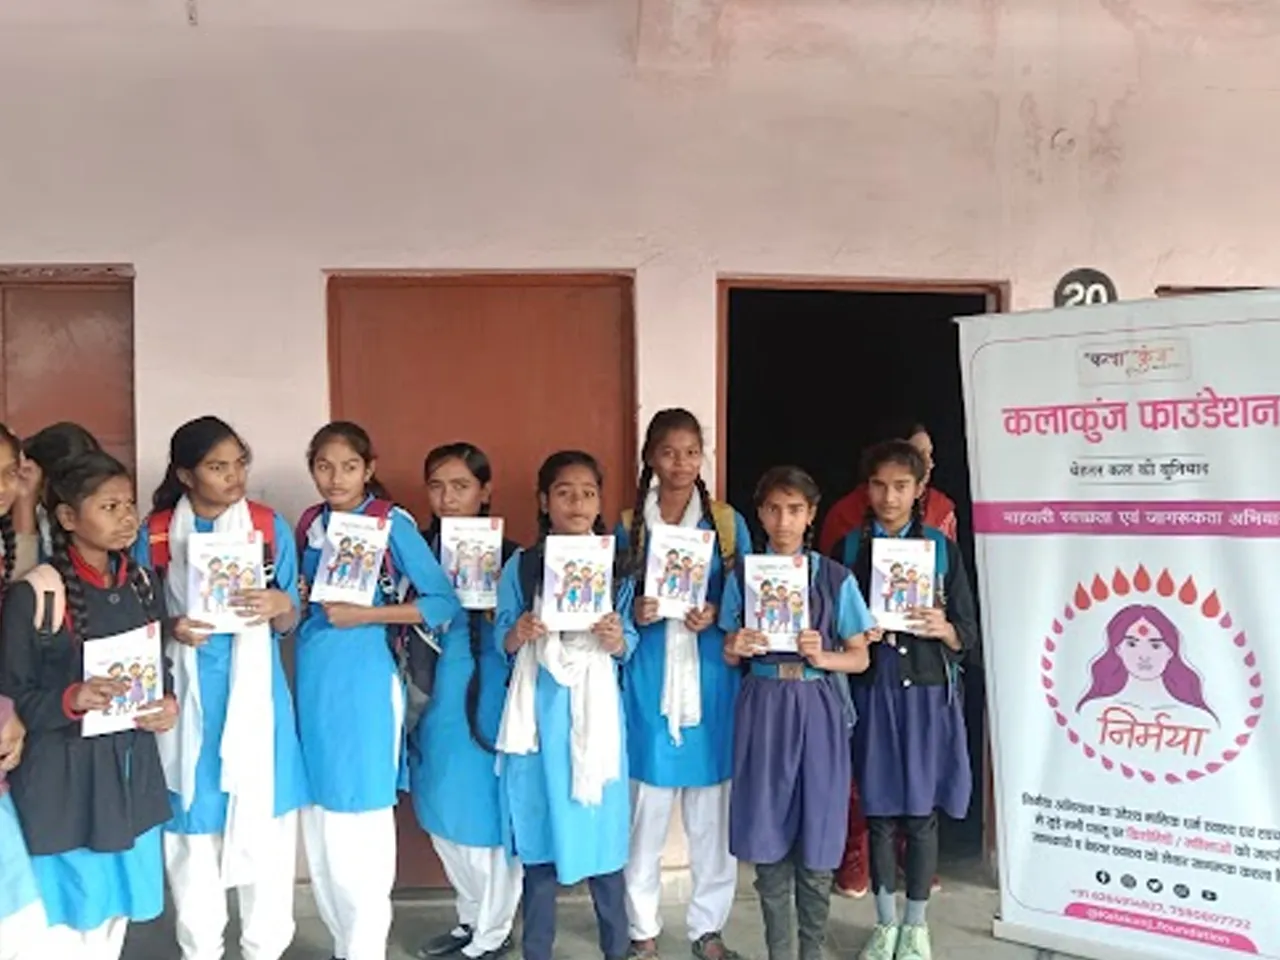 Stayfree and Menstrupedia organise workshops in MP to educate Girls on menstrual hygiene